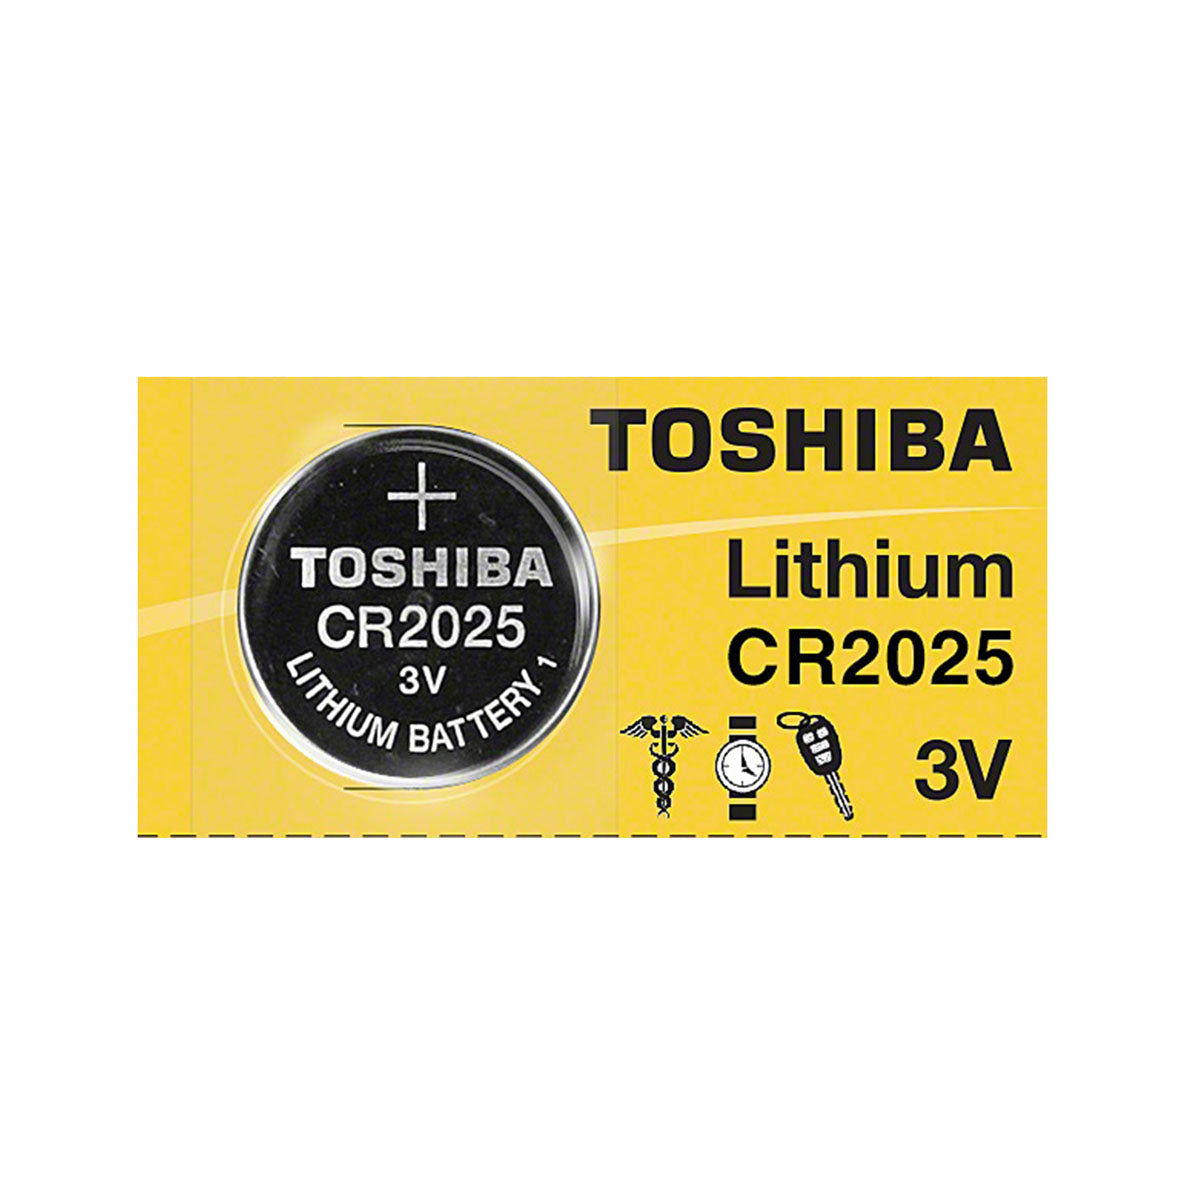 Toshiba CR2025 3V Lithium Coin Battery